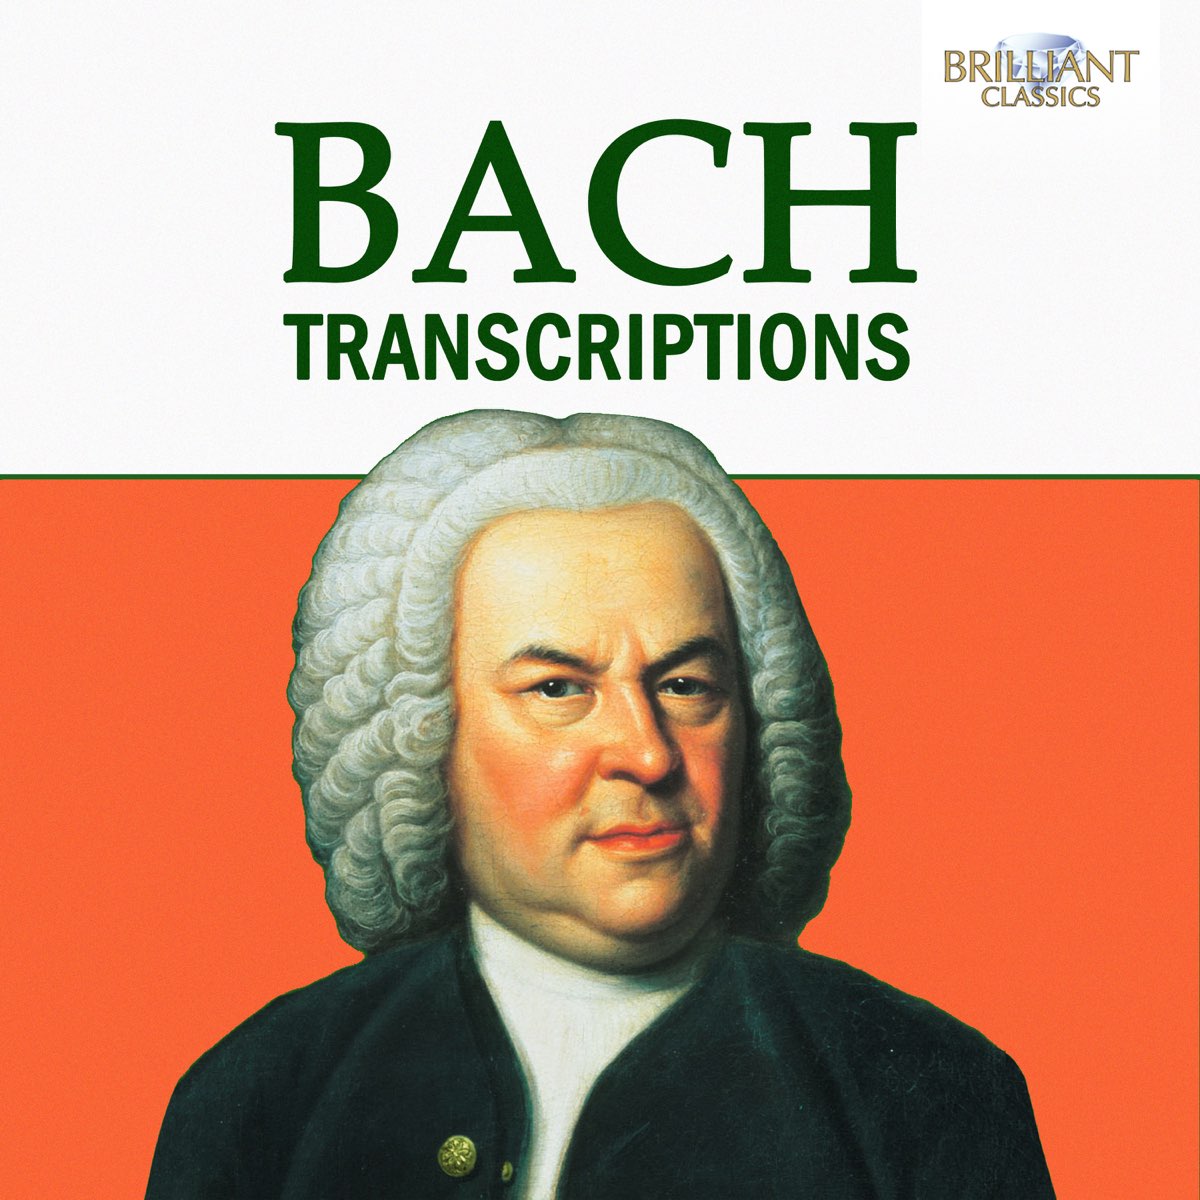 Бах трио. Транскрипция Баха прослушать. Johann Sebastian Bach - Toccata & Fugue in d Major, BWV 565. Bach Transcription Paul Galbraight. Johann Sebastian Bach - Toccata & Fugue in d Major, BWV 565 1970.